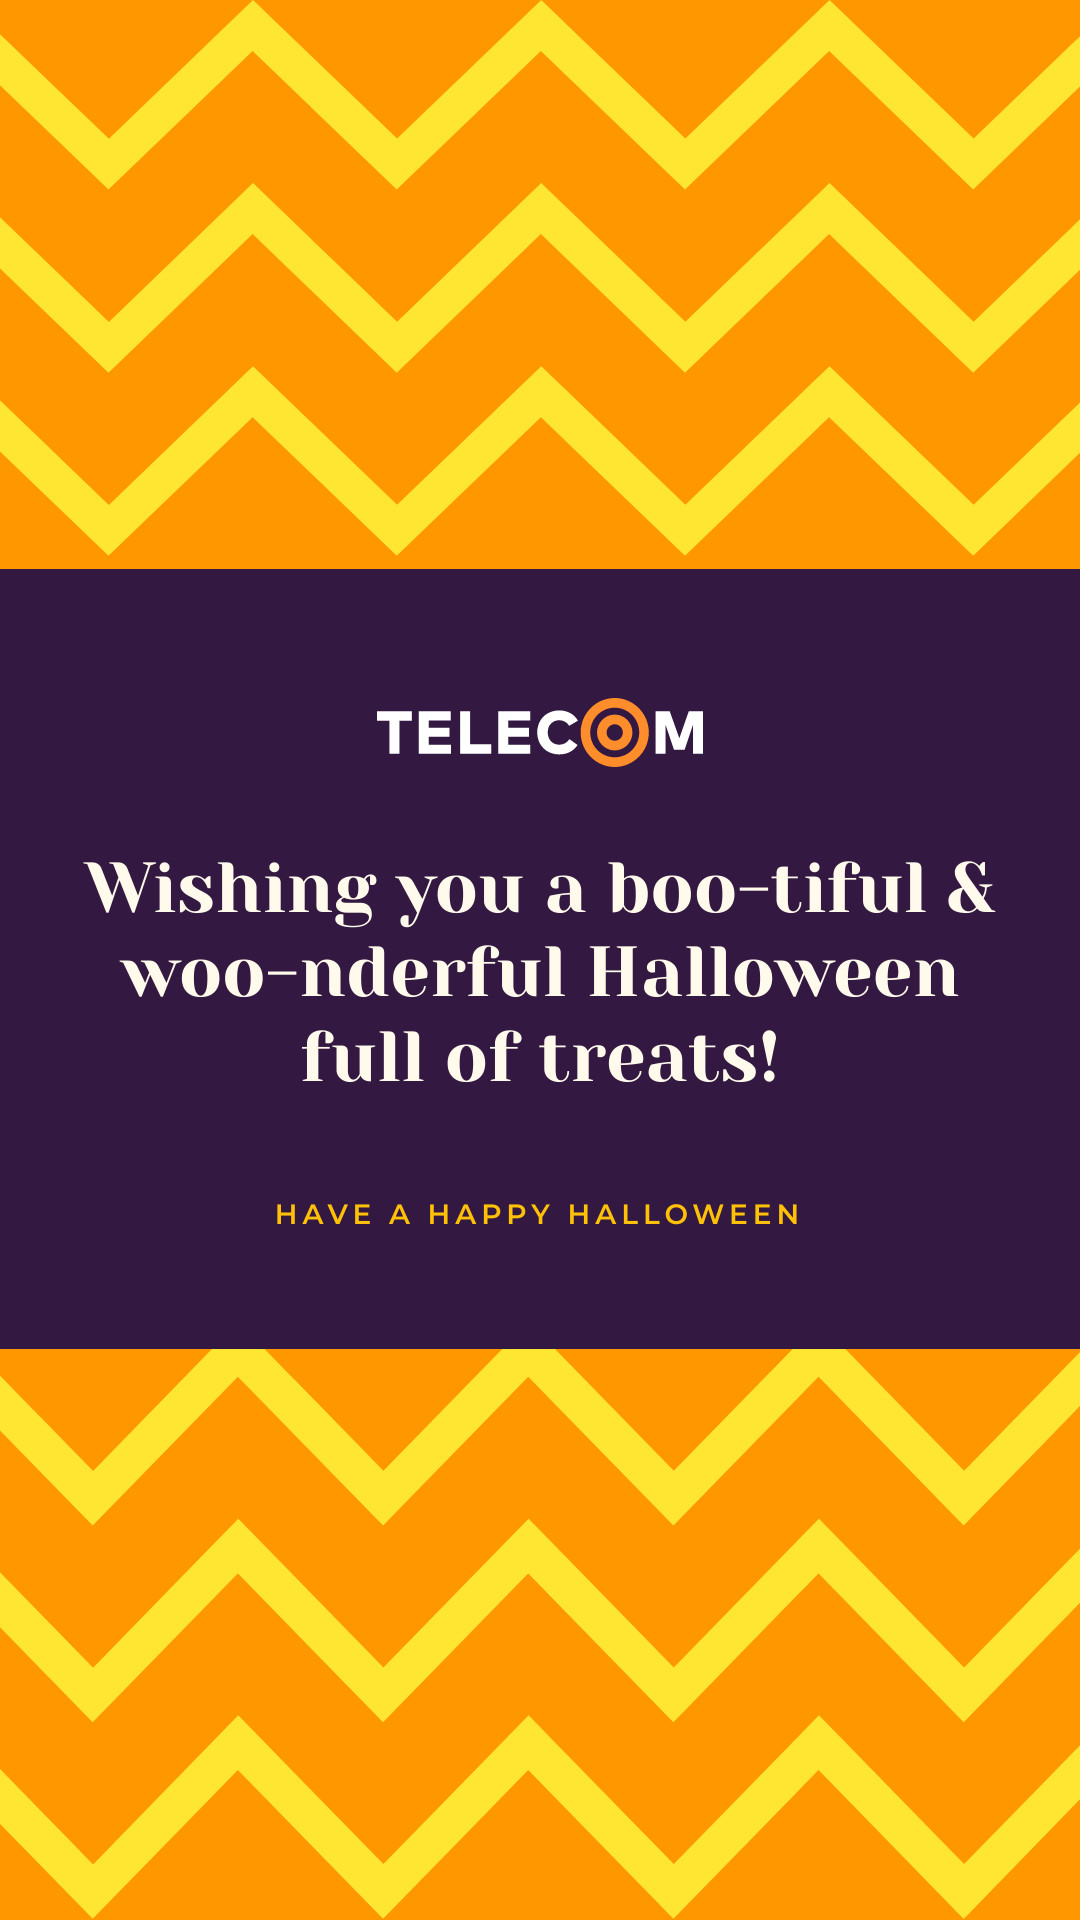 Telecom Bootiful and Woonderful Halloween